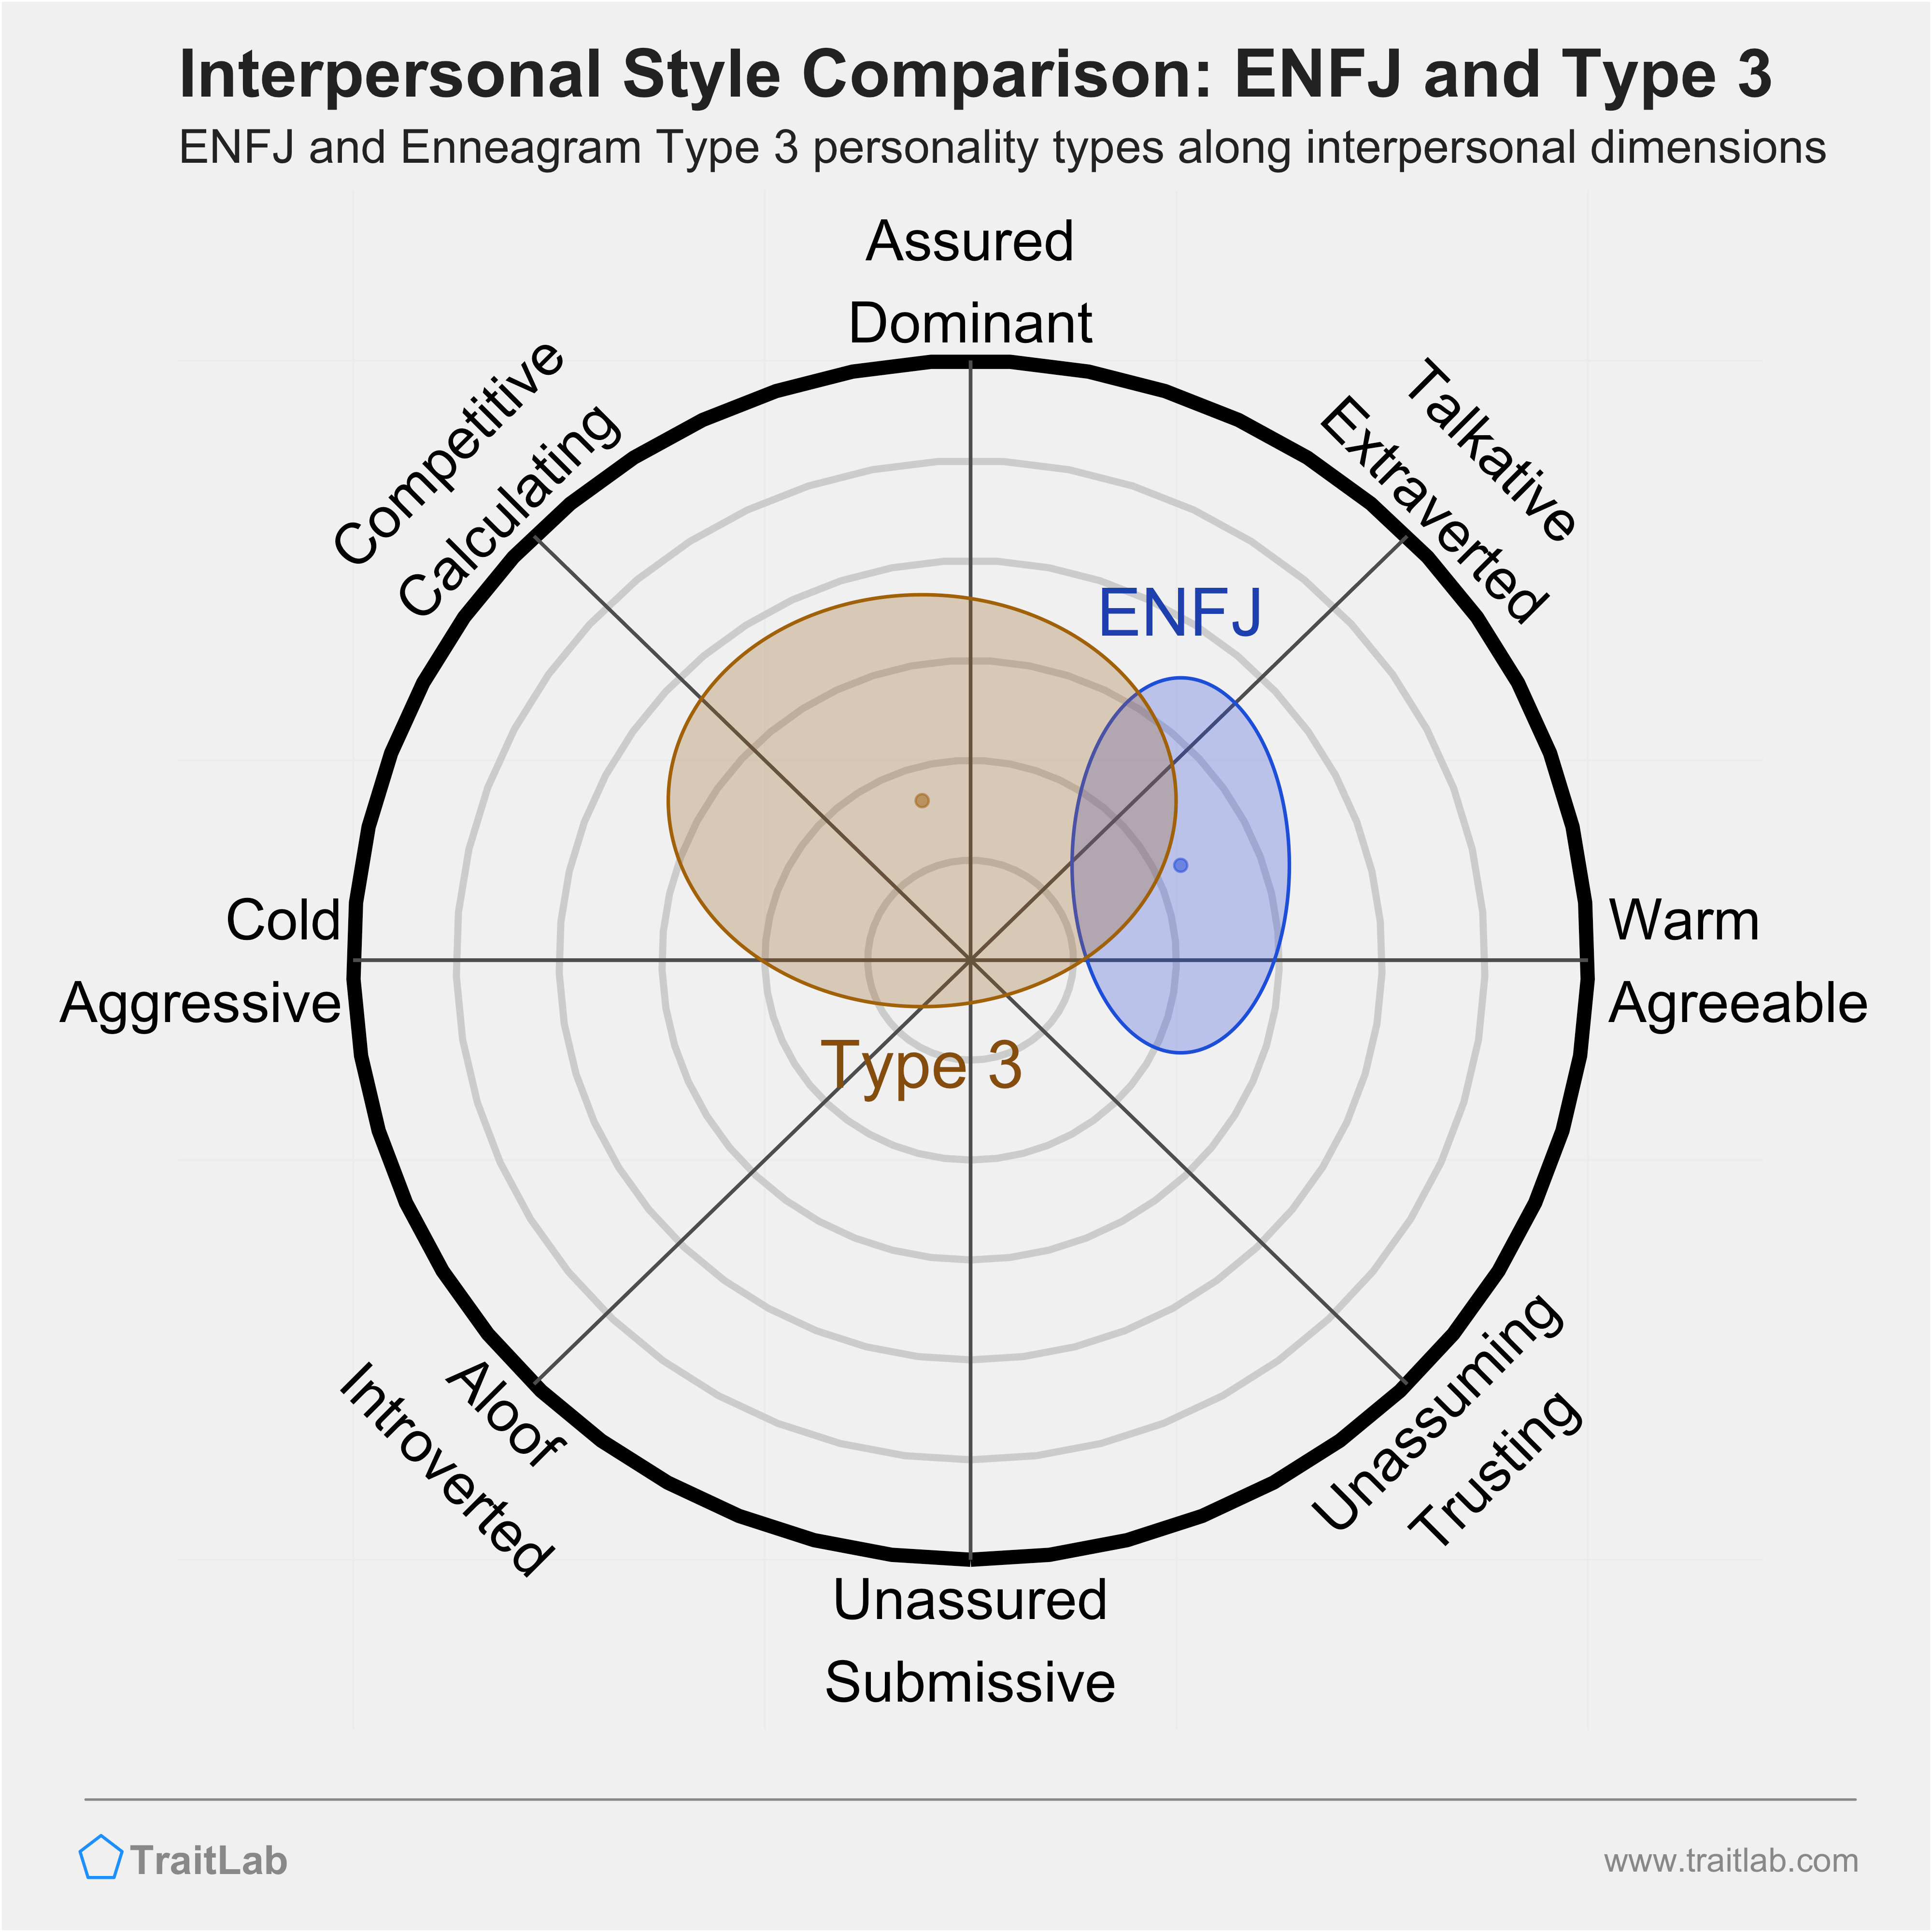 Enneagram ENFJ and Type 3 comparison across interpersonal dimensions